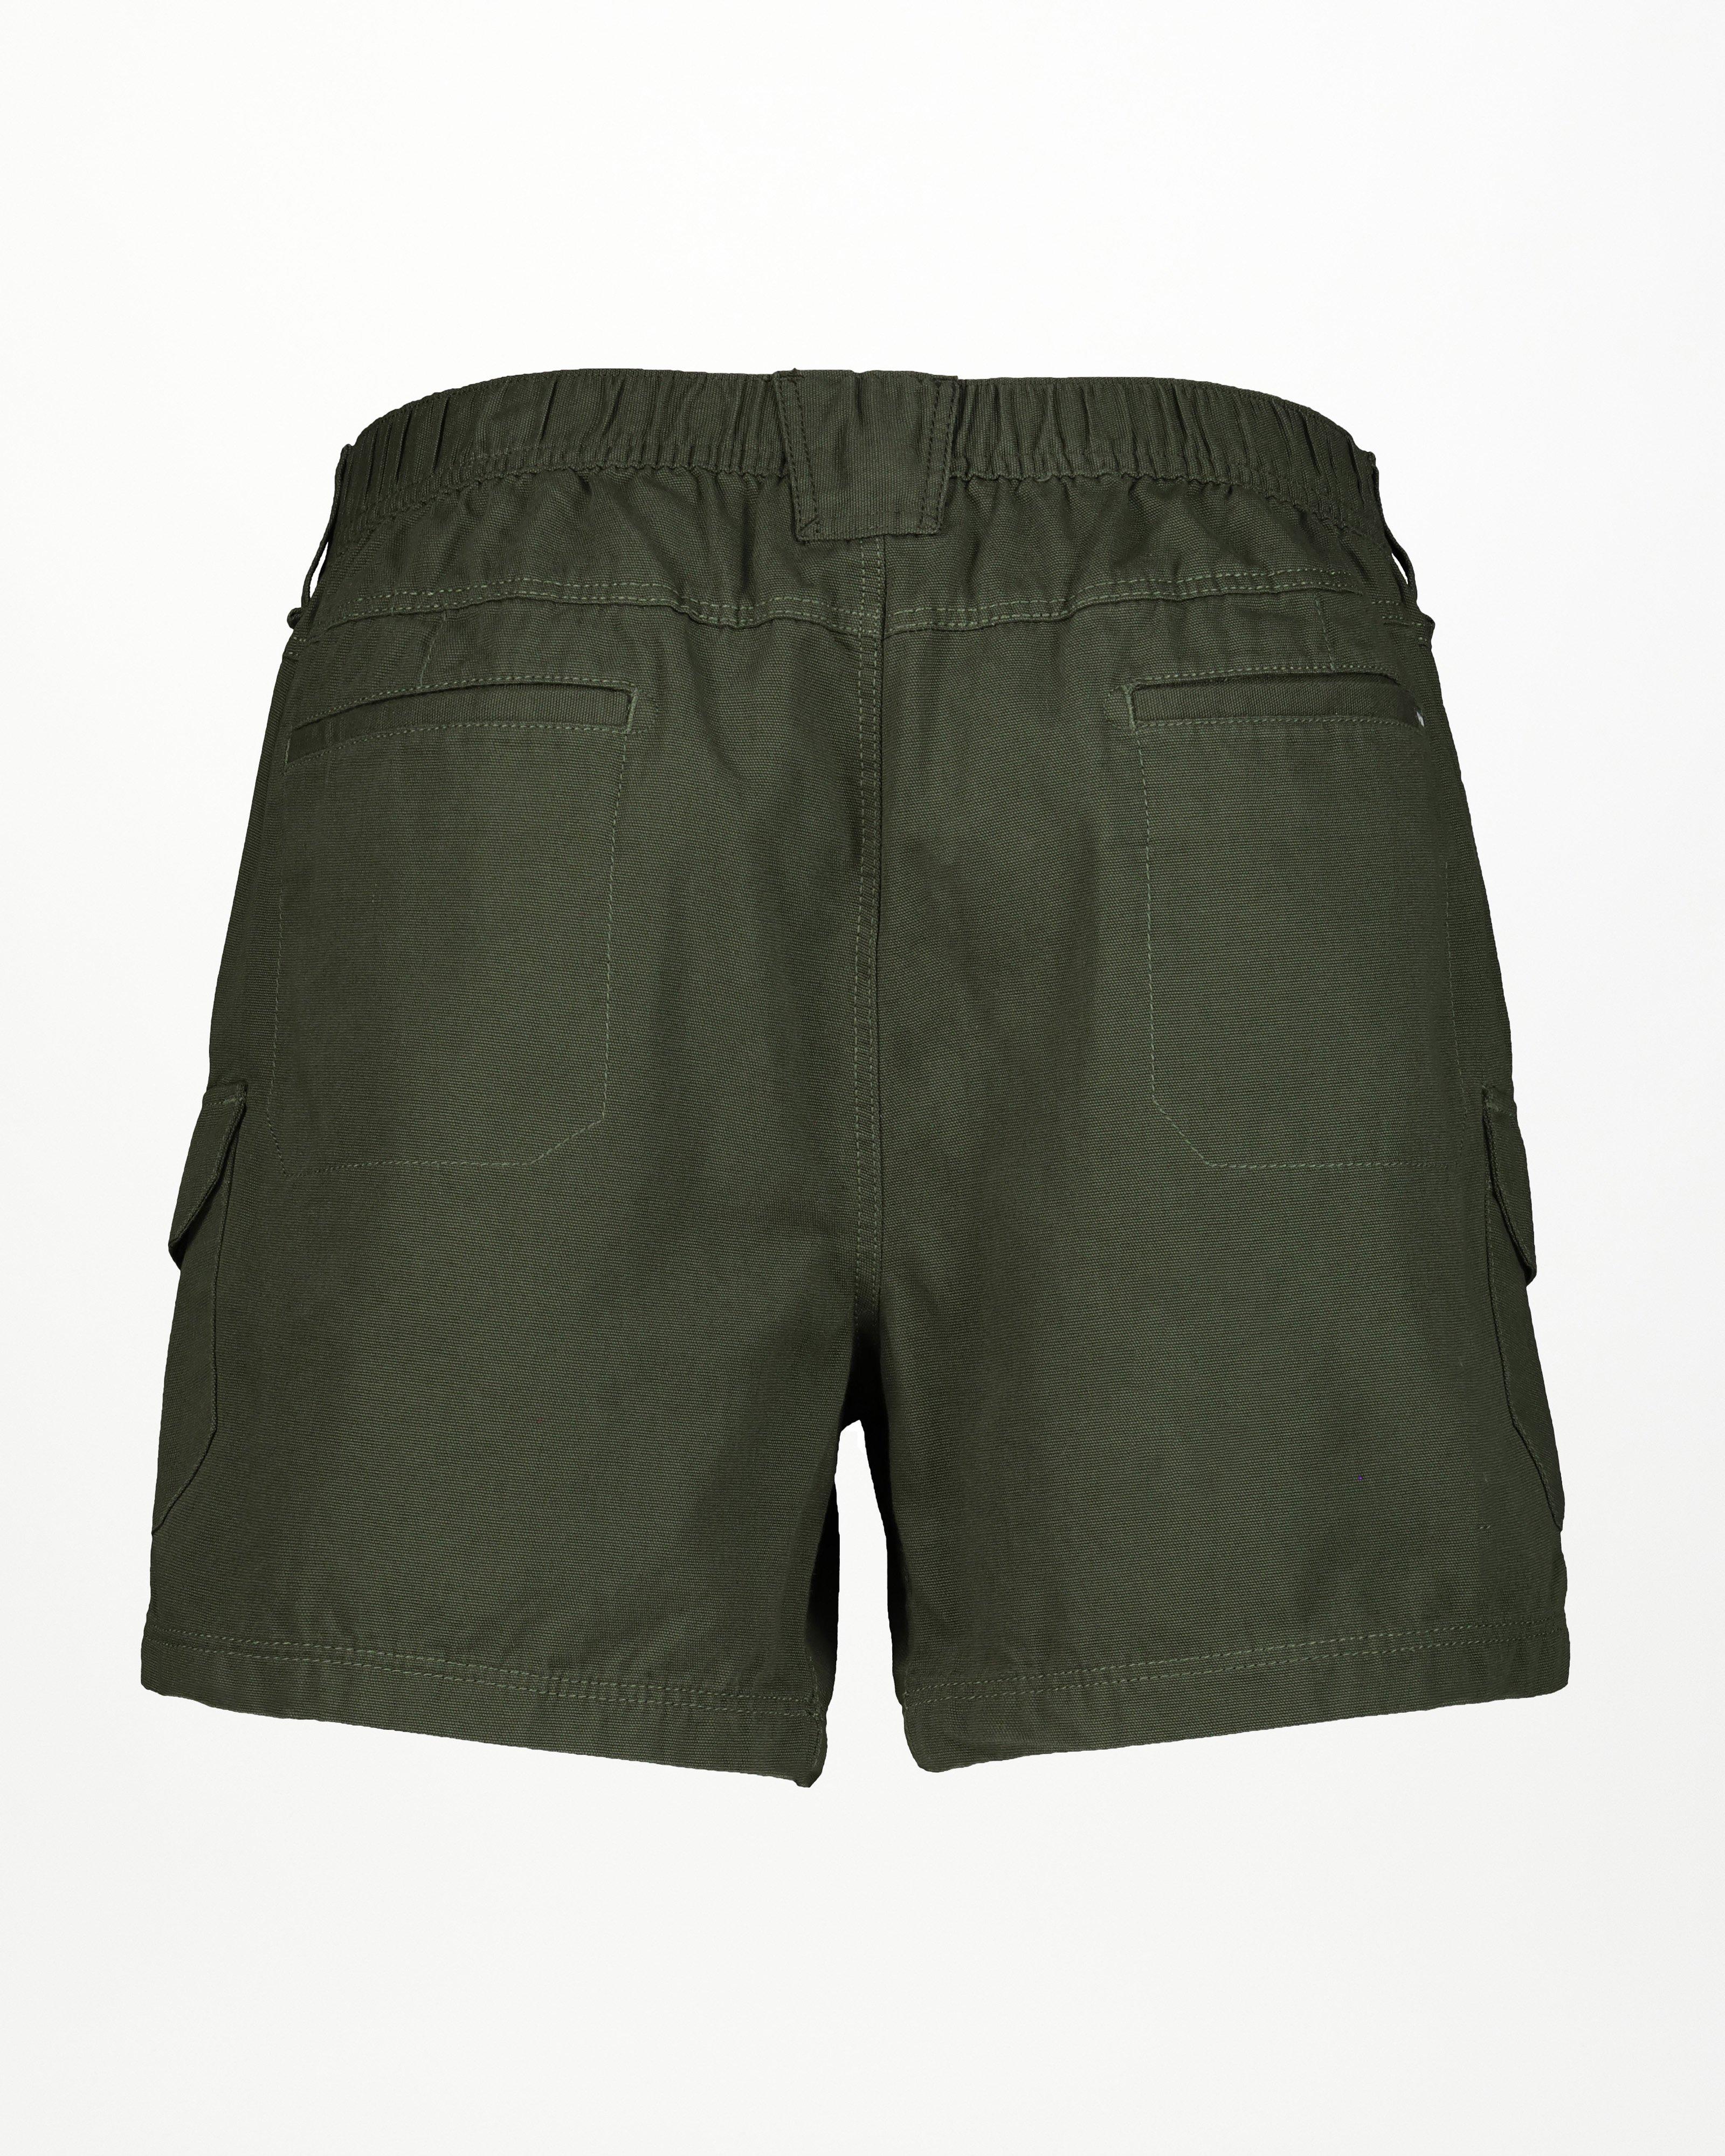 K-Way Elements Men’s Safari Shorts Extended Sizes -  Dark Olive